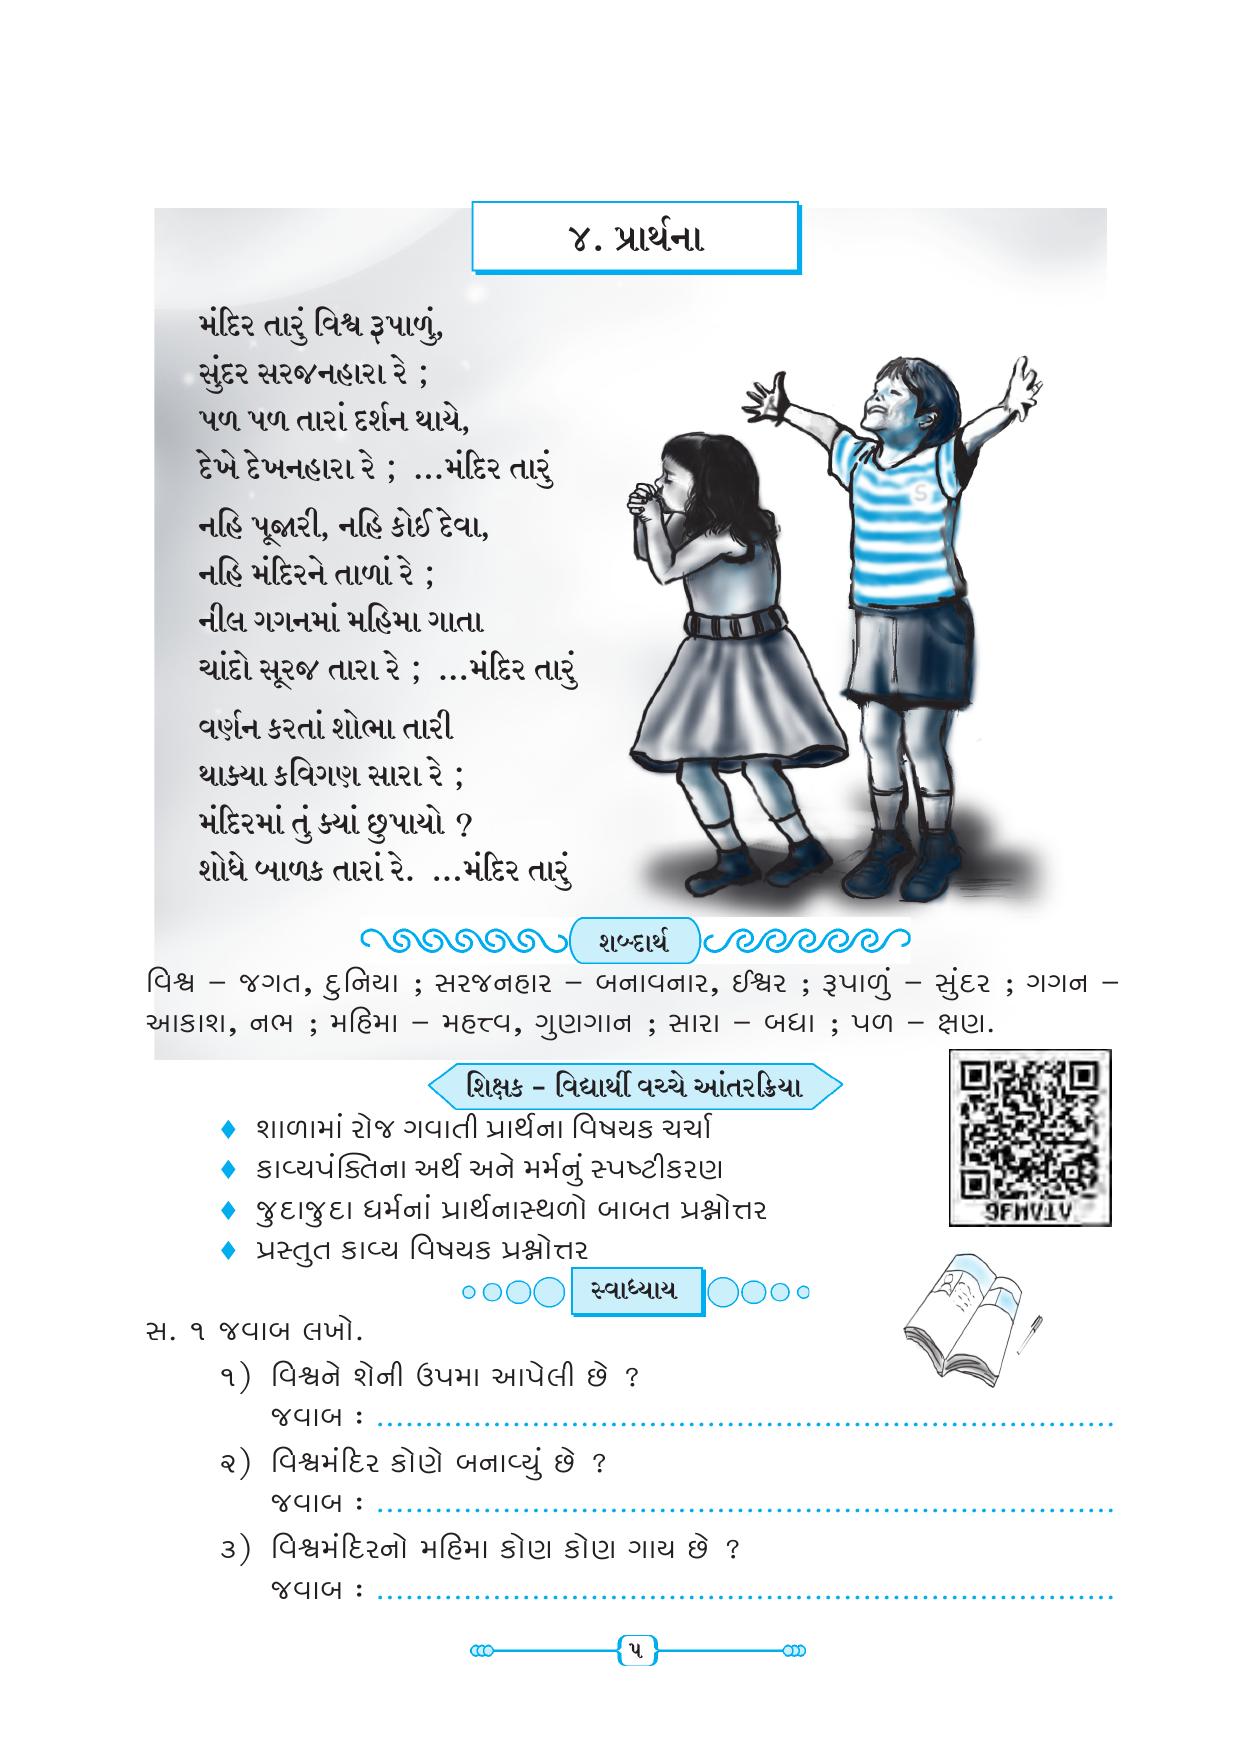 Maharashtra Board Class 5 Gujarati Textbook - Page 14